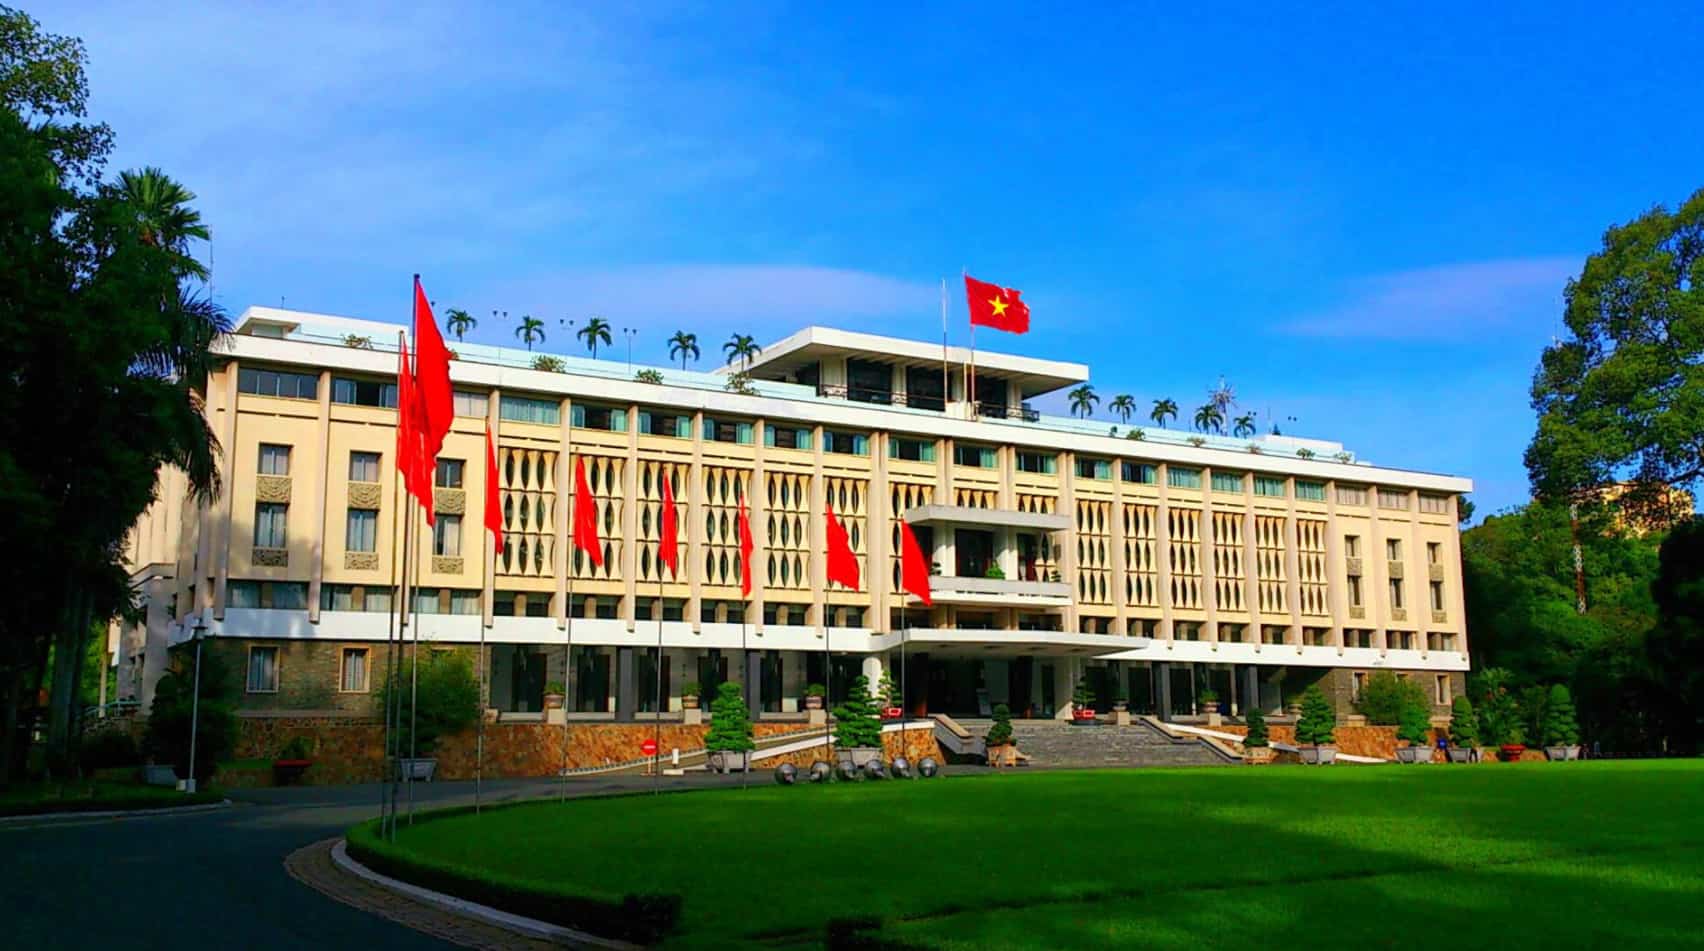 Is Saigon worth visiting?